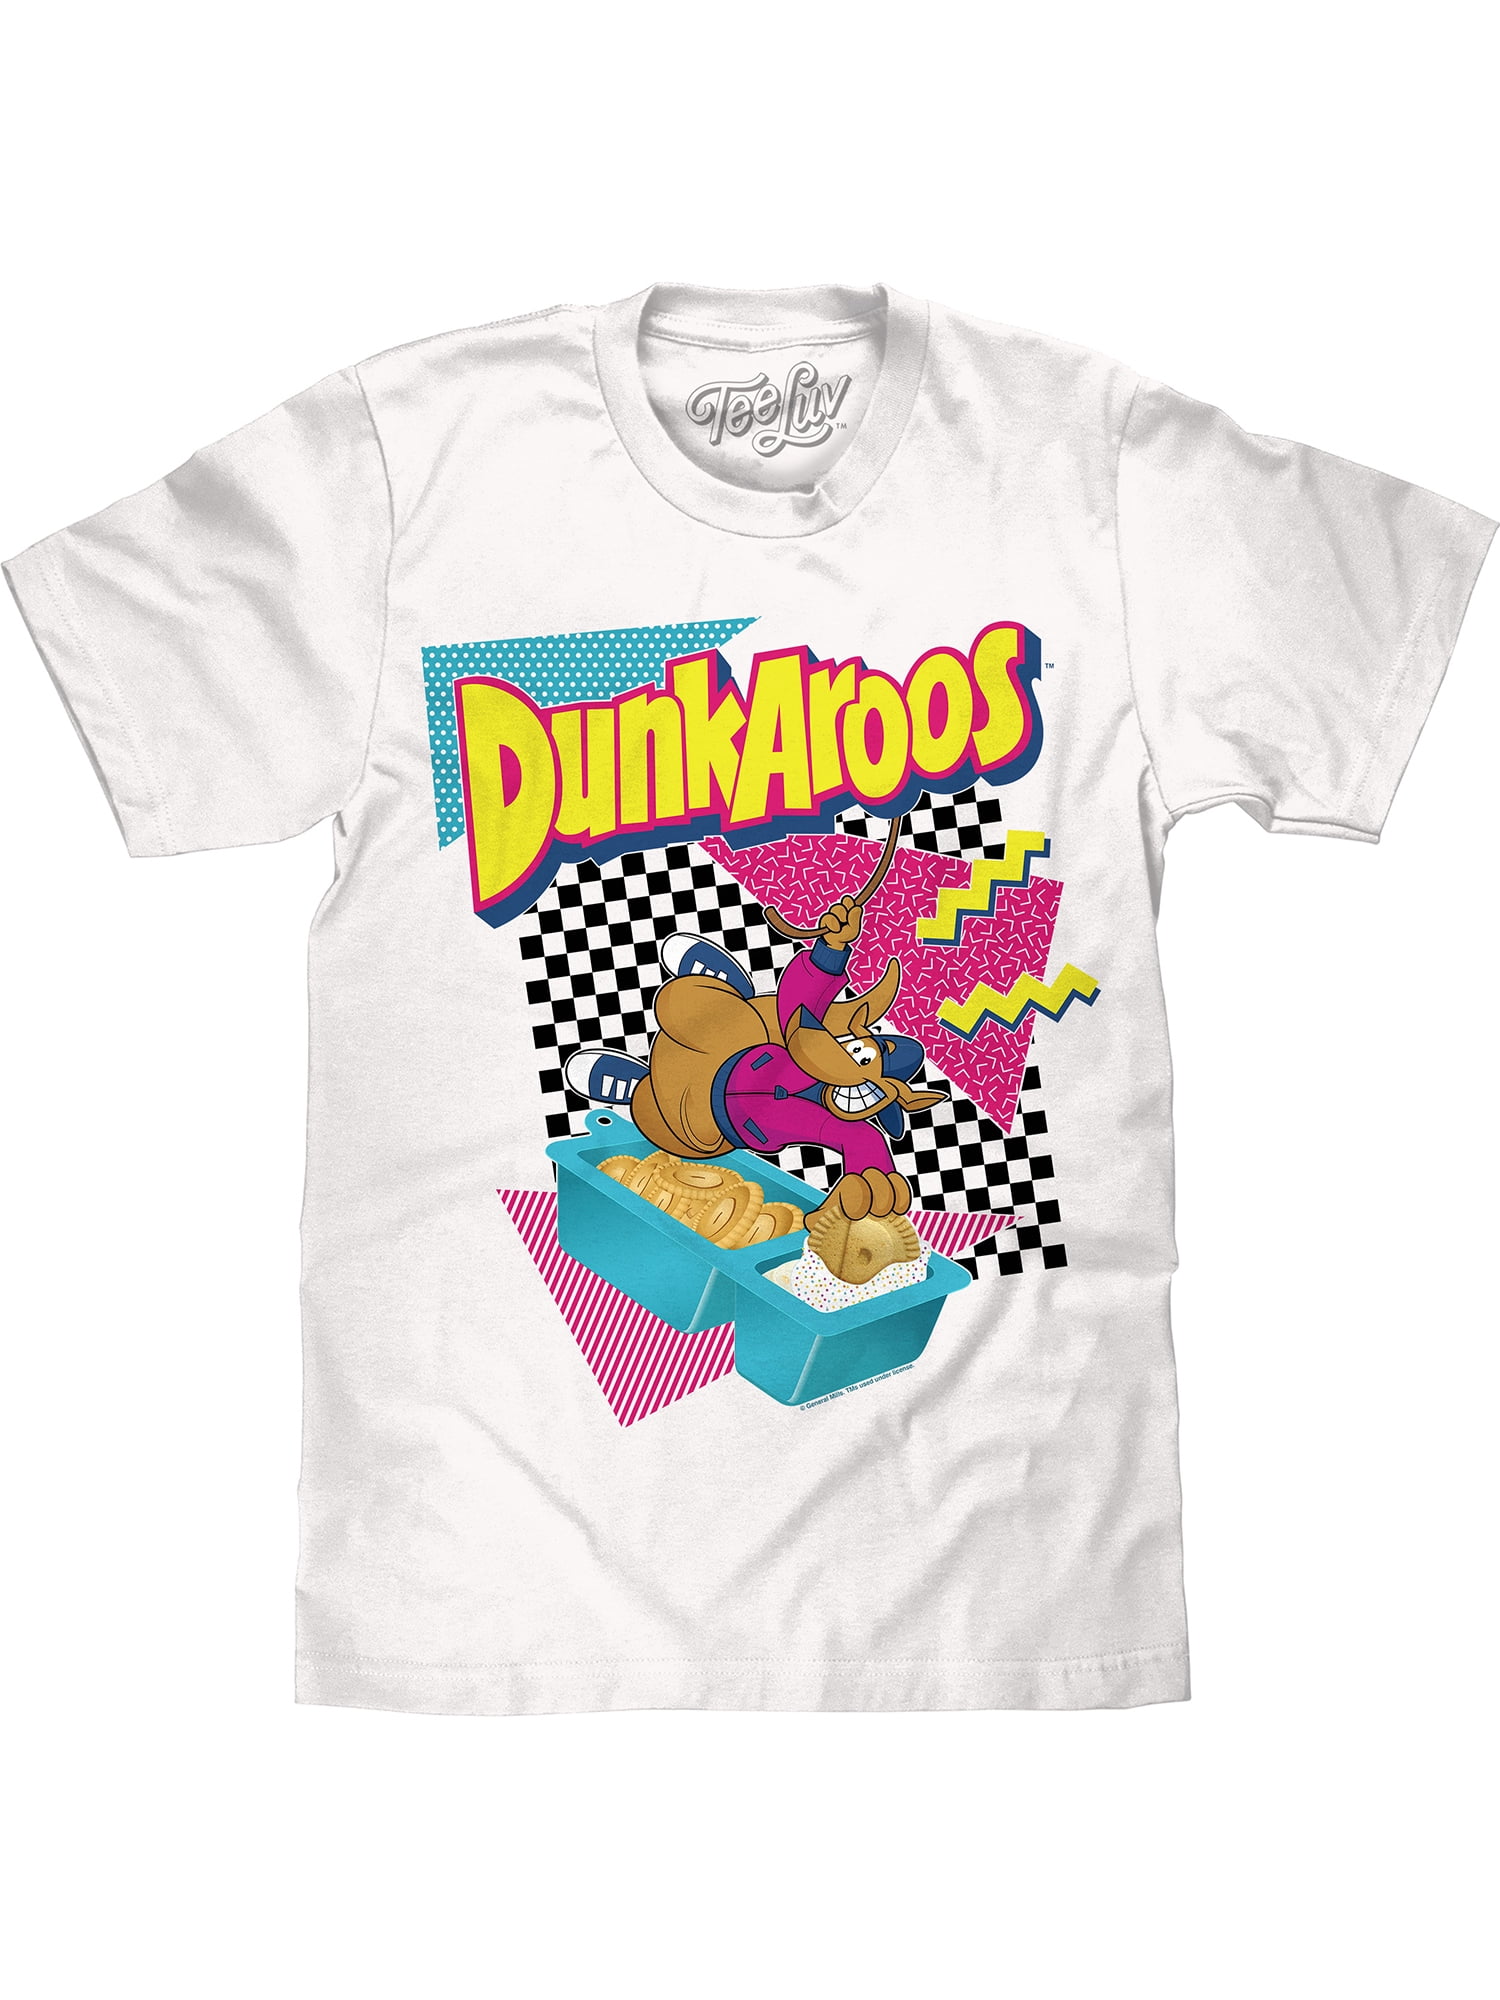 (XXL) Dunkaroos Cartoon Men\'s Luv Kangaroo Tee T-Shirt